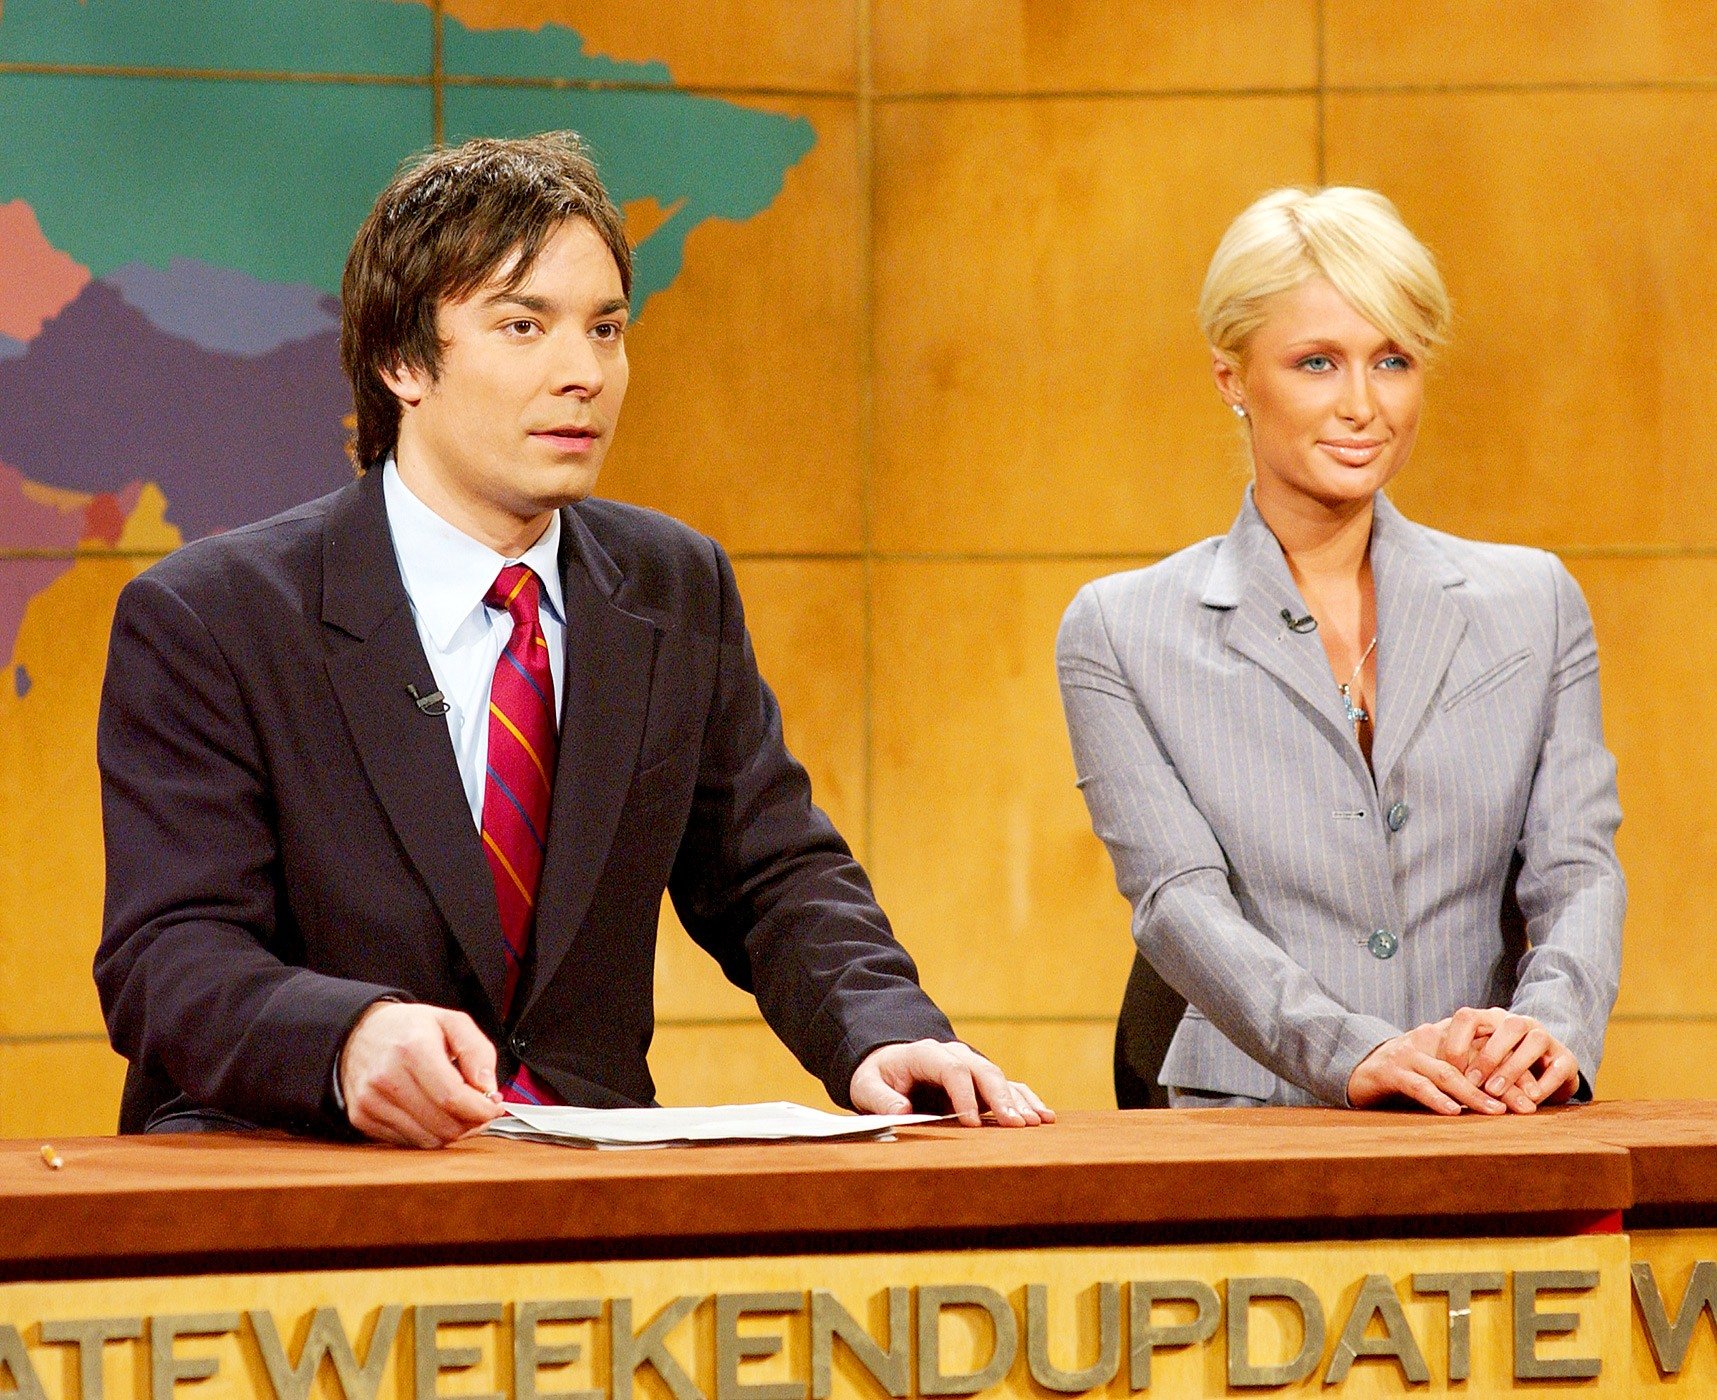 Jimmy Fallon and Paris Hilton on Saturday Night Live